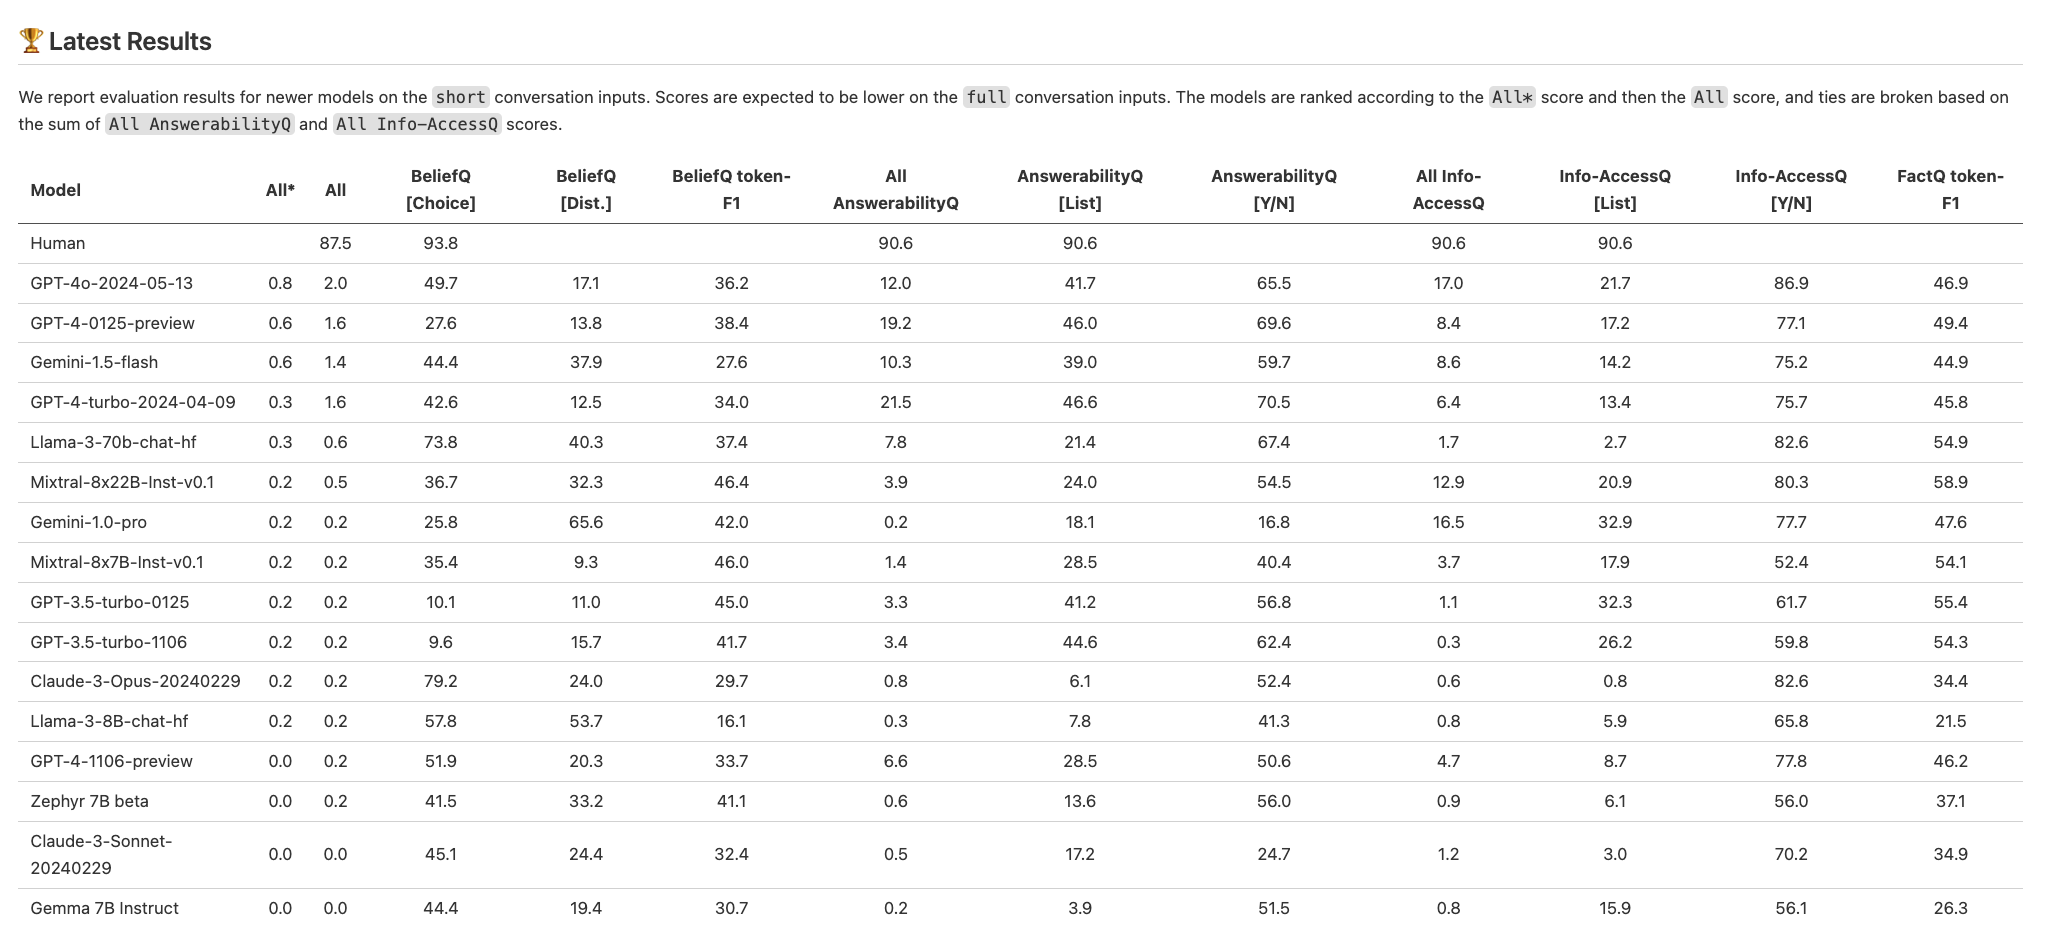 Updated model performance on FANToM benchmark in table format.